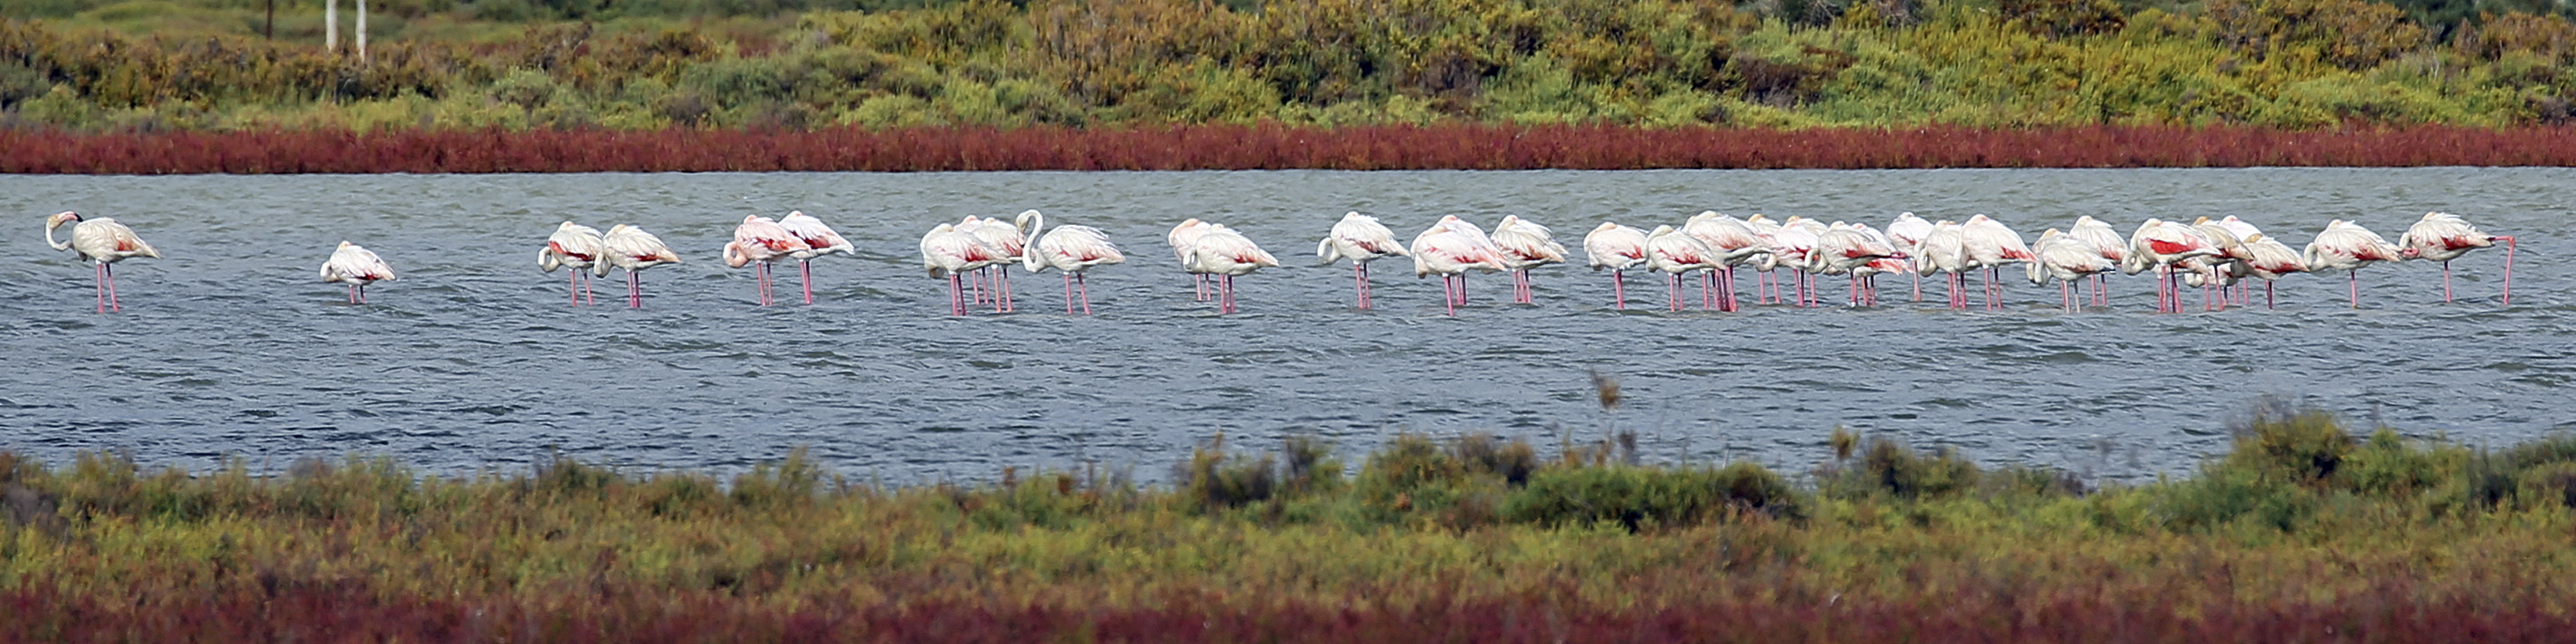 Flamingos in Spanien: Rosarote Beobachtung im Ebrodelta